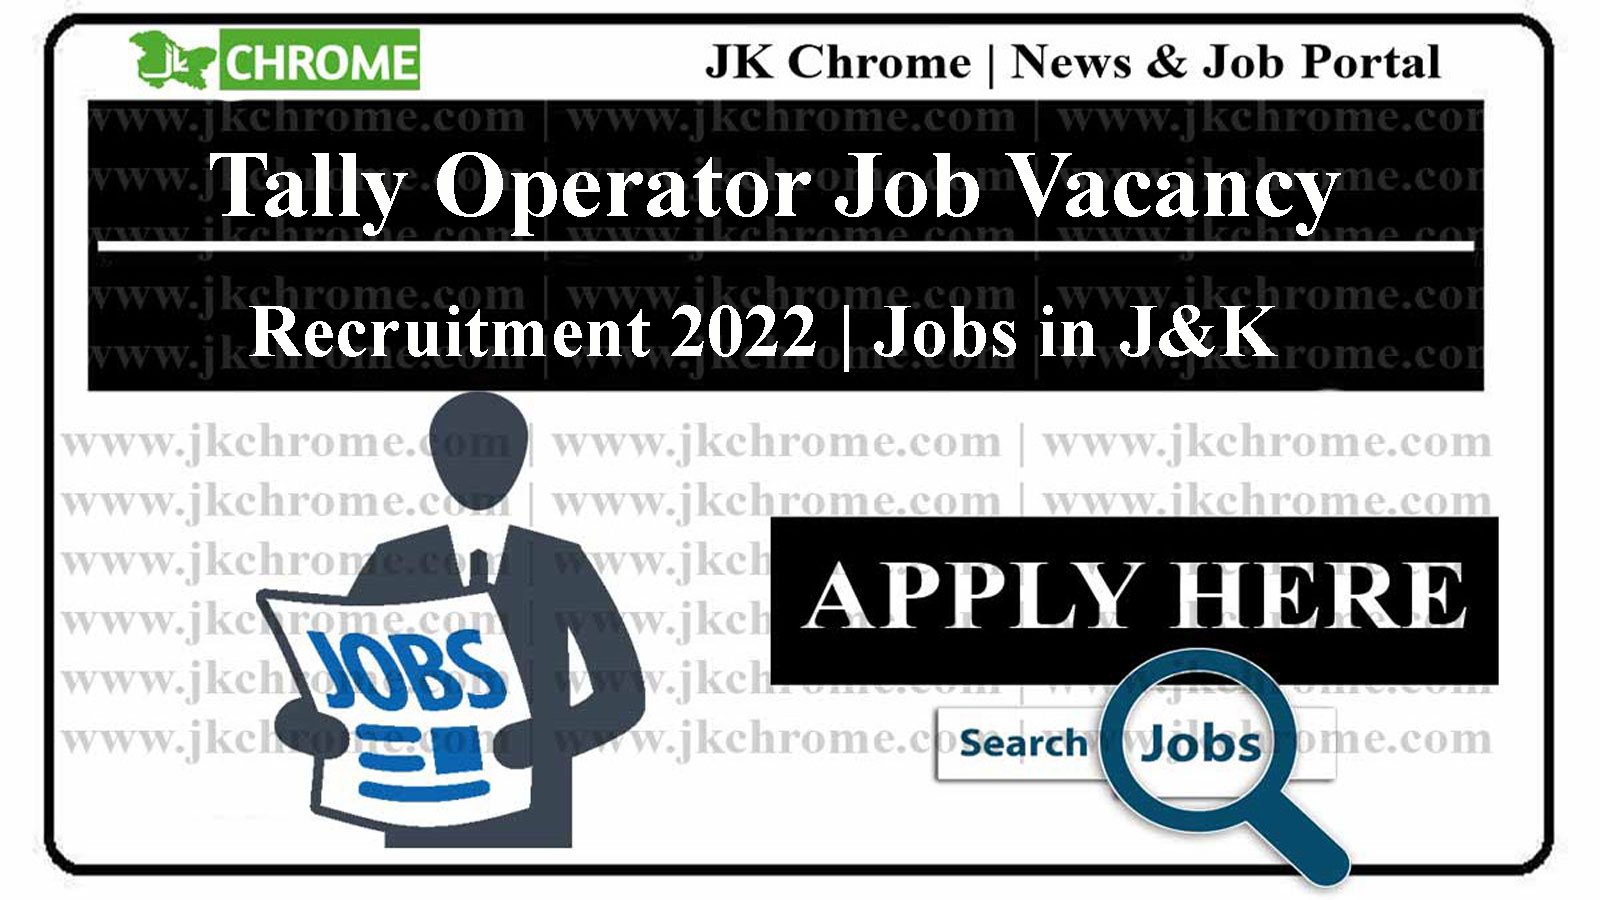 Tally Operator Job Vacancy in Srinagar